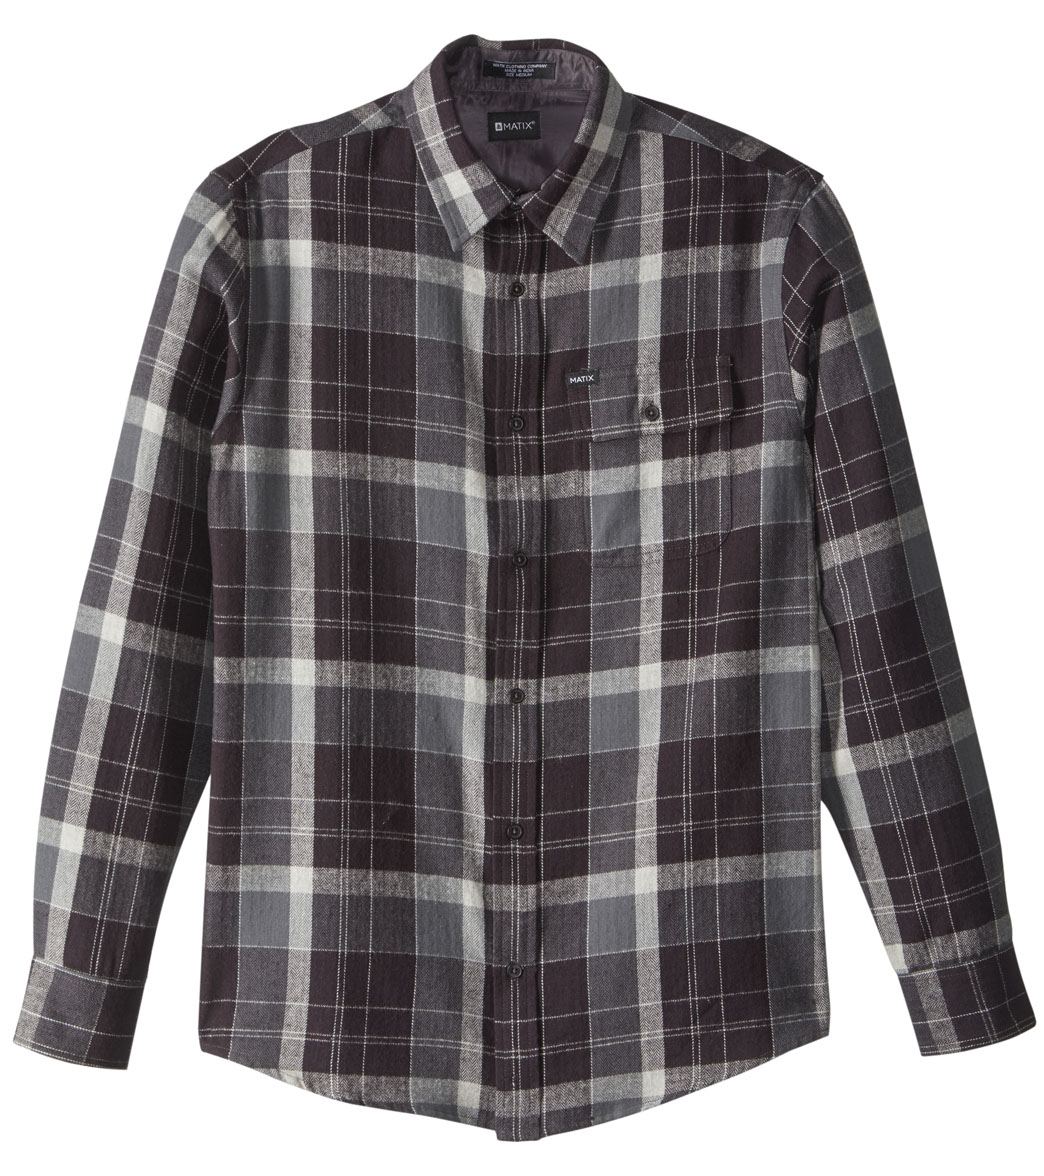 Matix Men's Hargrove Long Sleeve Flannel Shirt - Charcoal Melange Small Cotton - Swimoutlet.com